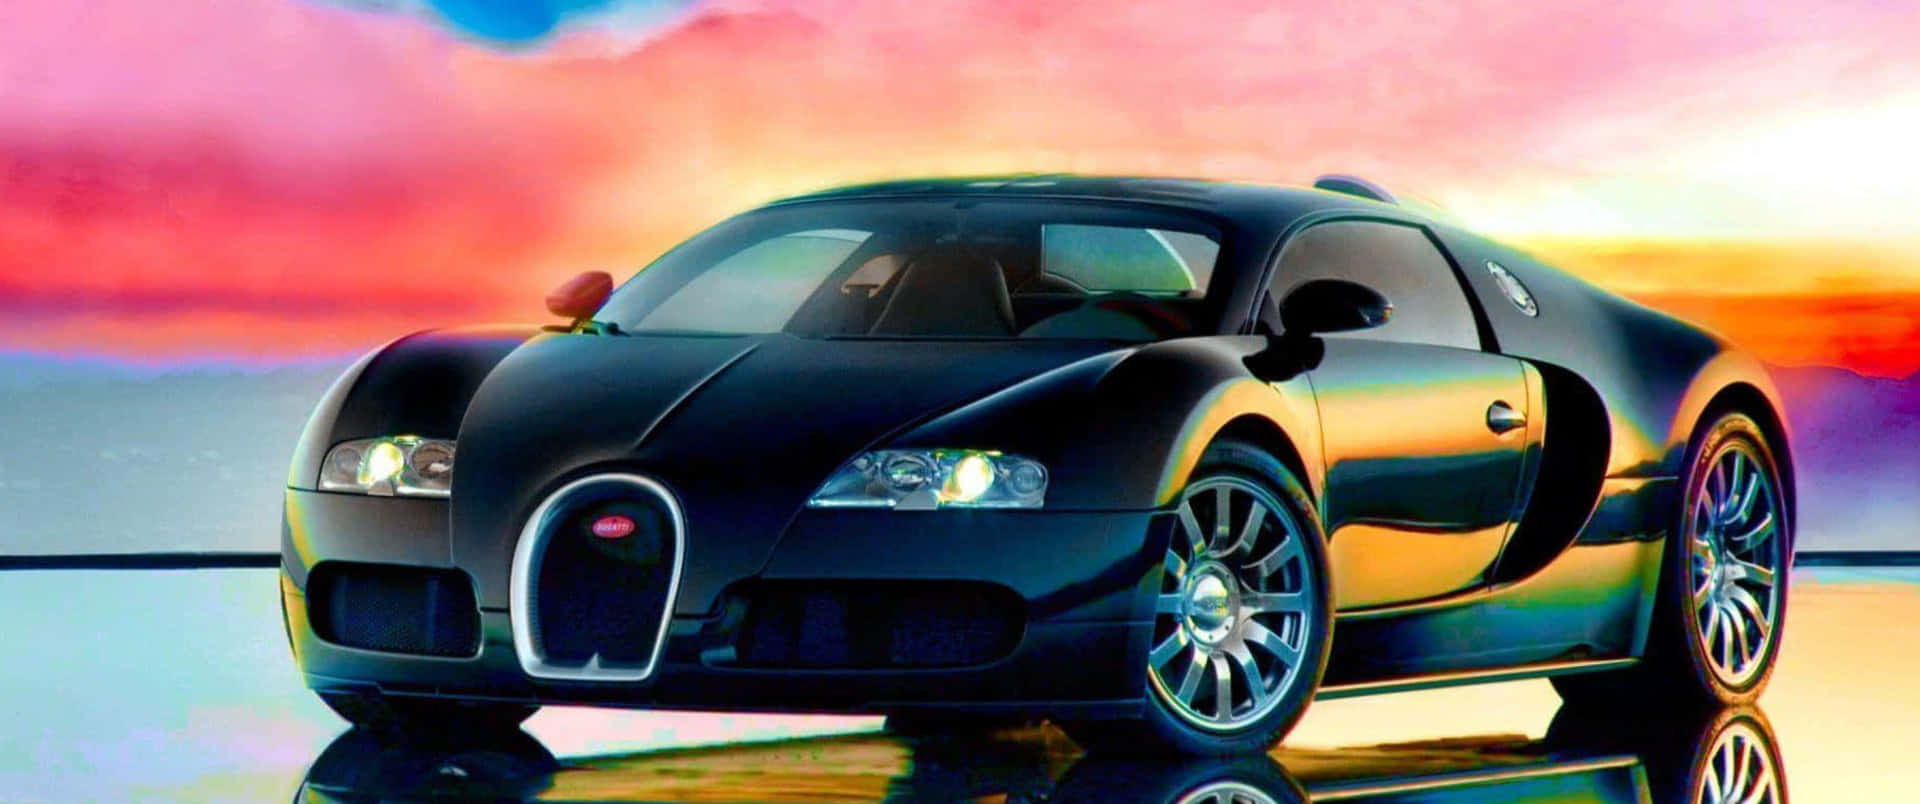 Speeding Ahead - 3440x1440p Bugatti